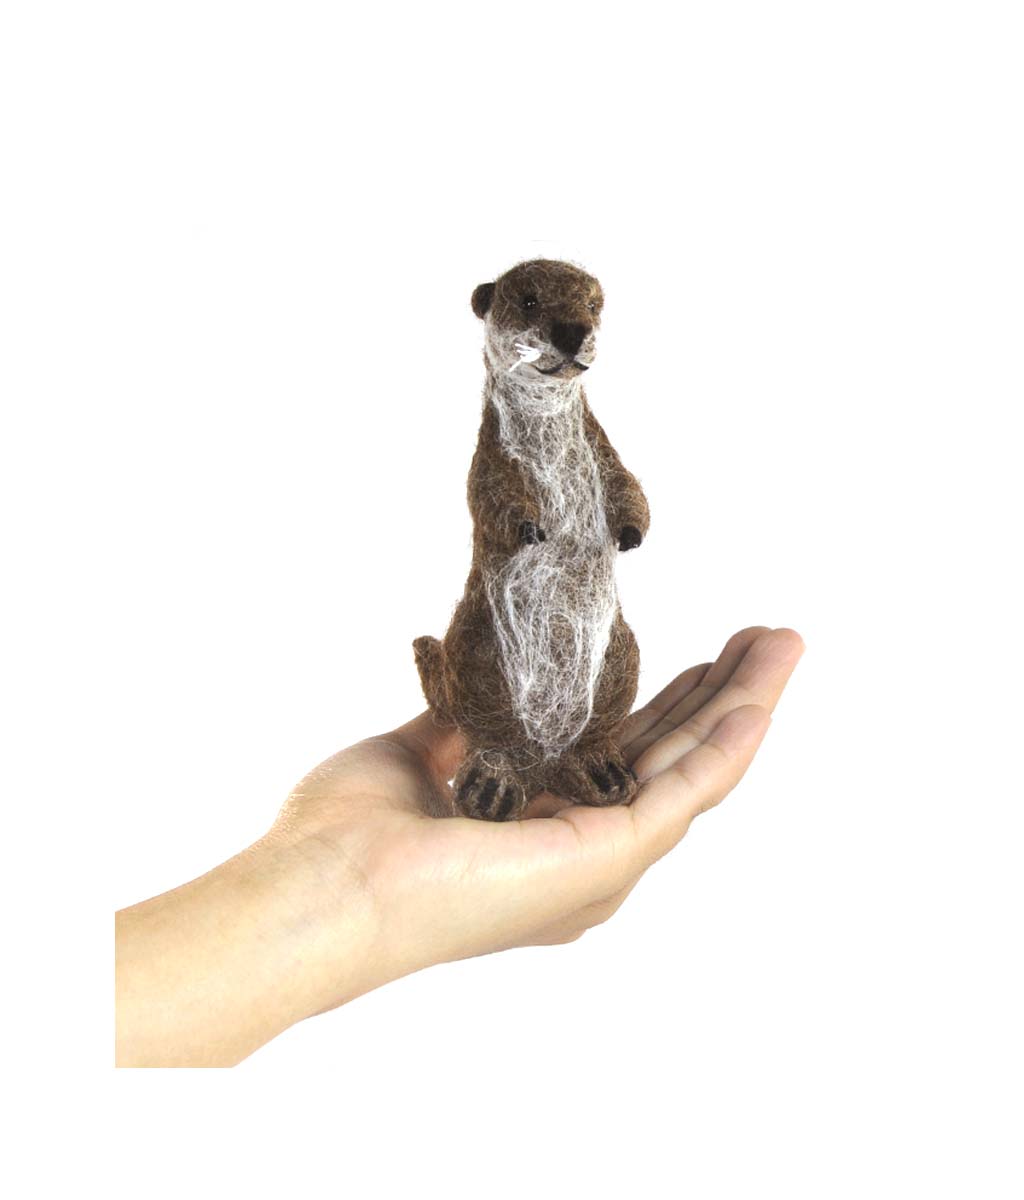 Otter & Baby: Wildlife Felted Alpaca Sculpture